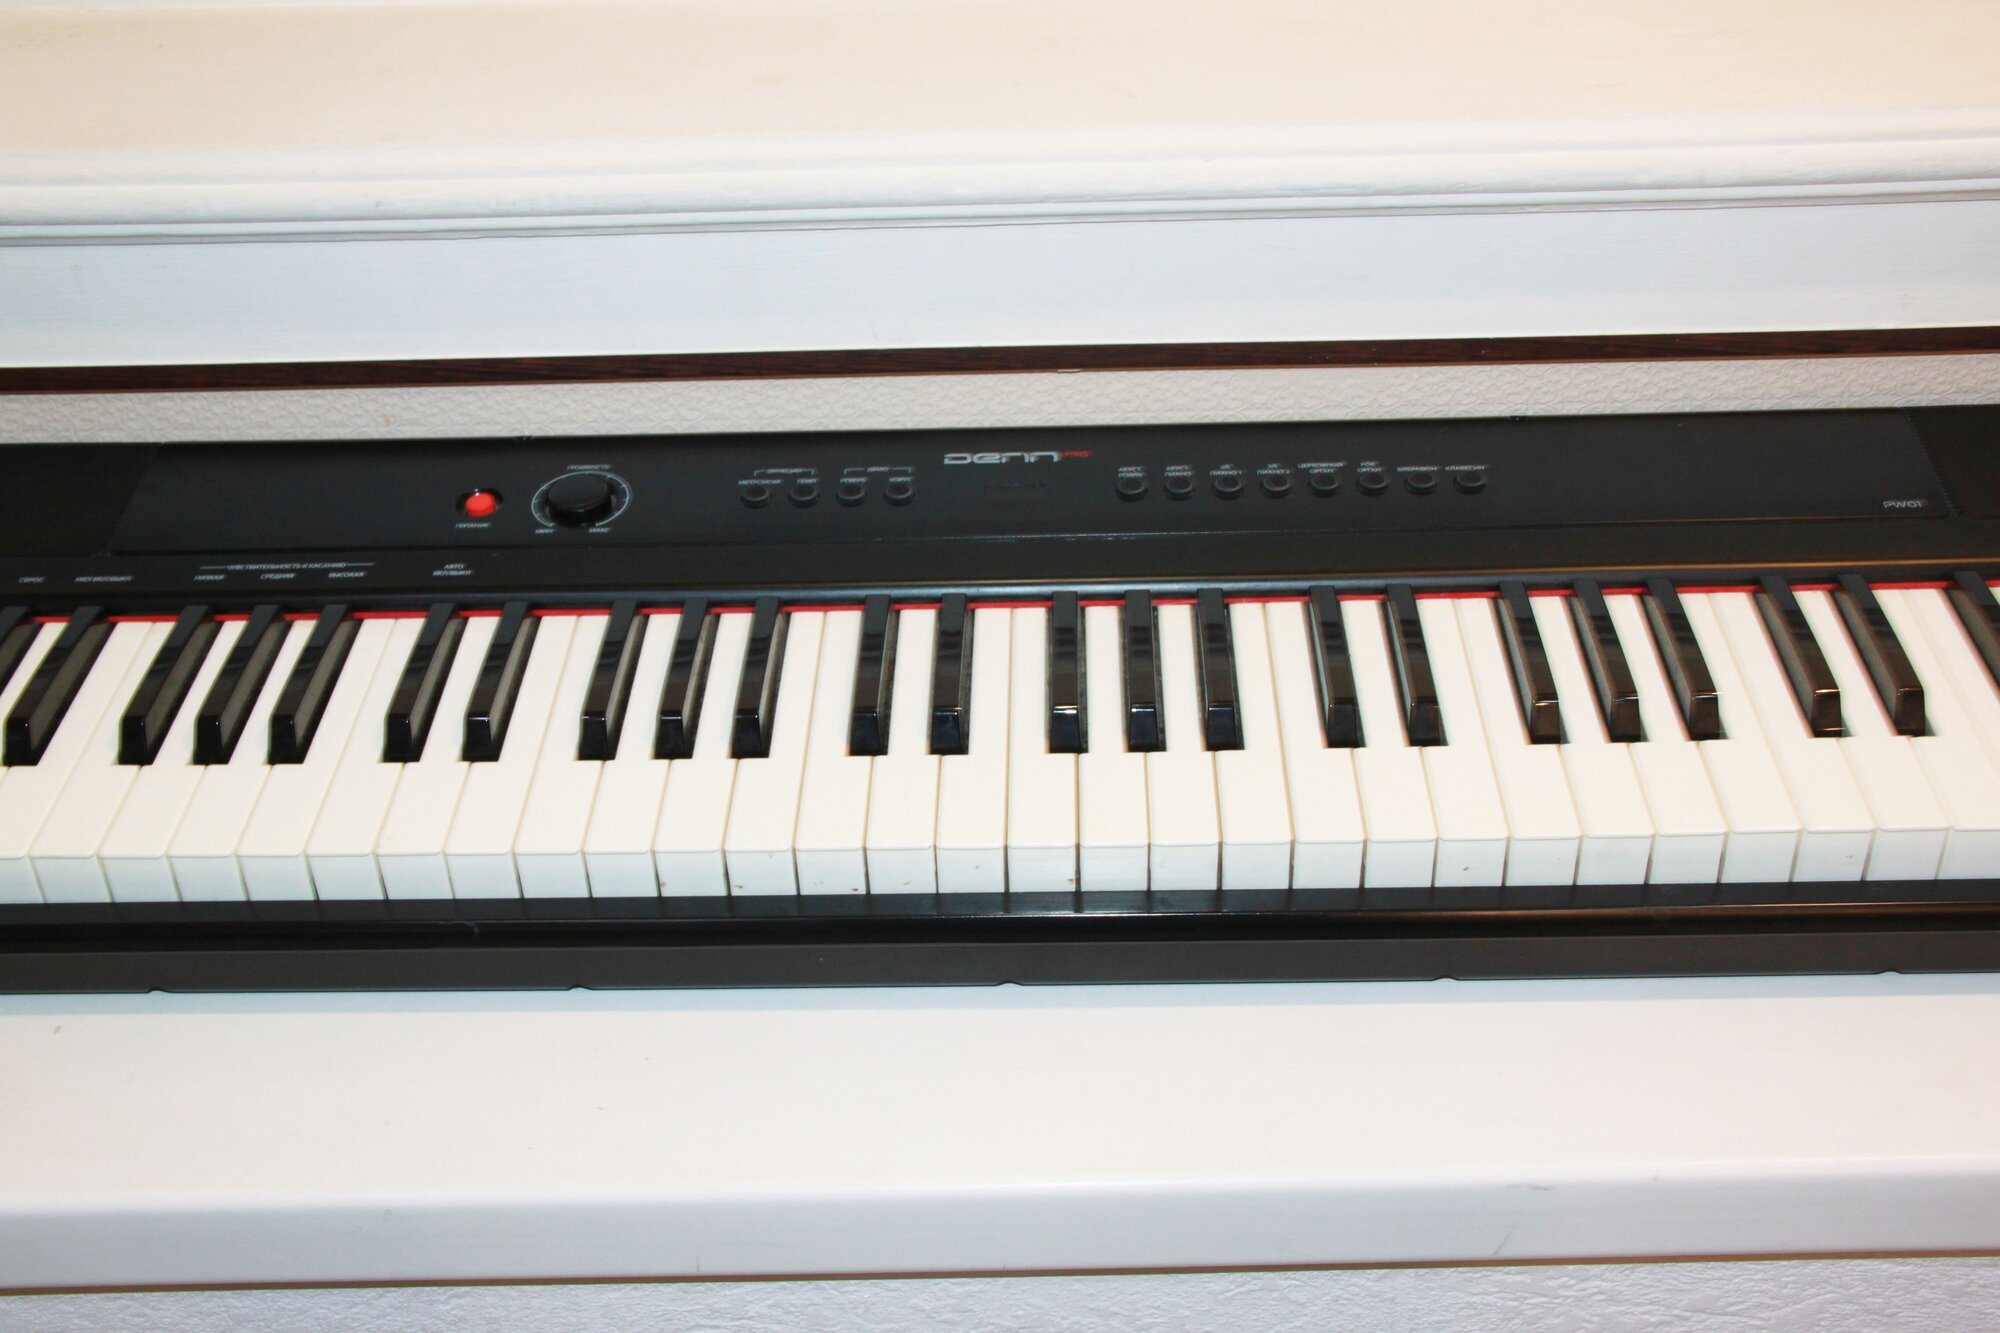 Цифровое пианино DENN Pro PW01